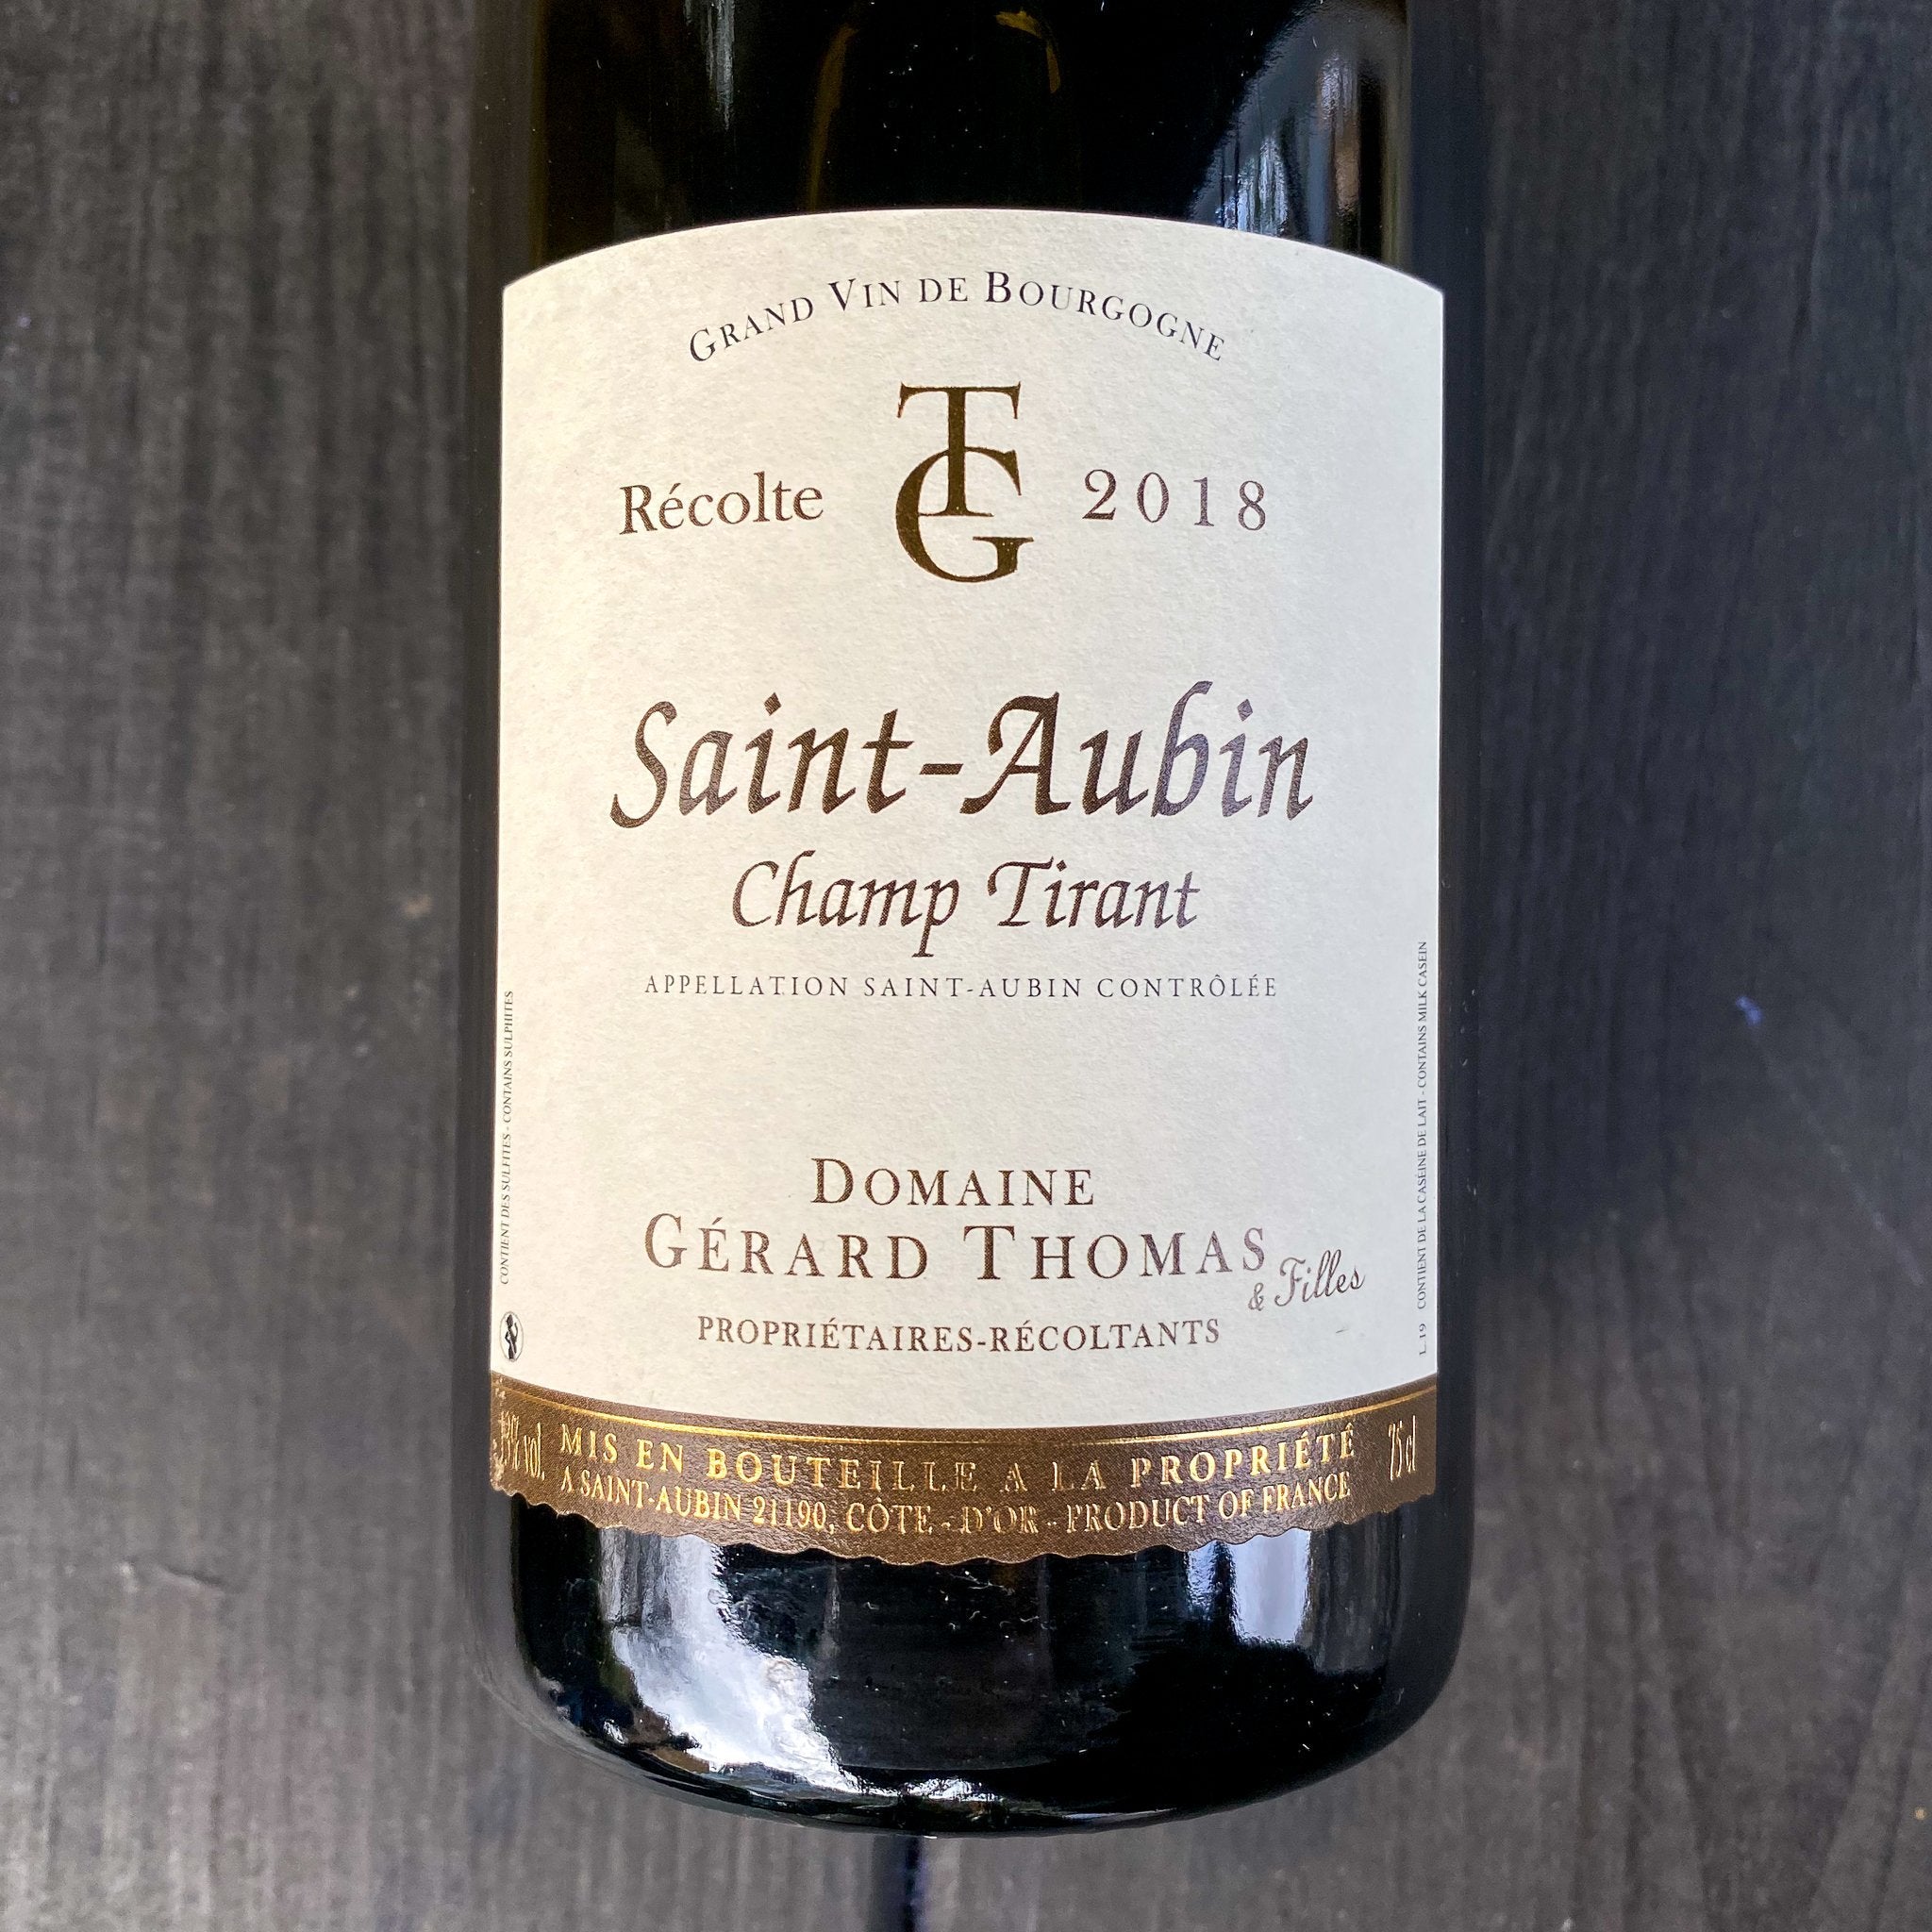 Saint-Aubin 'Champ Tirant' 2018, Gerard Thomas et Filles, France - Vindinista